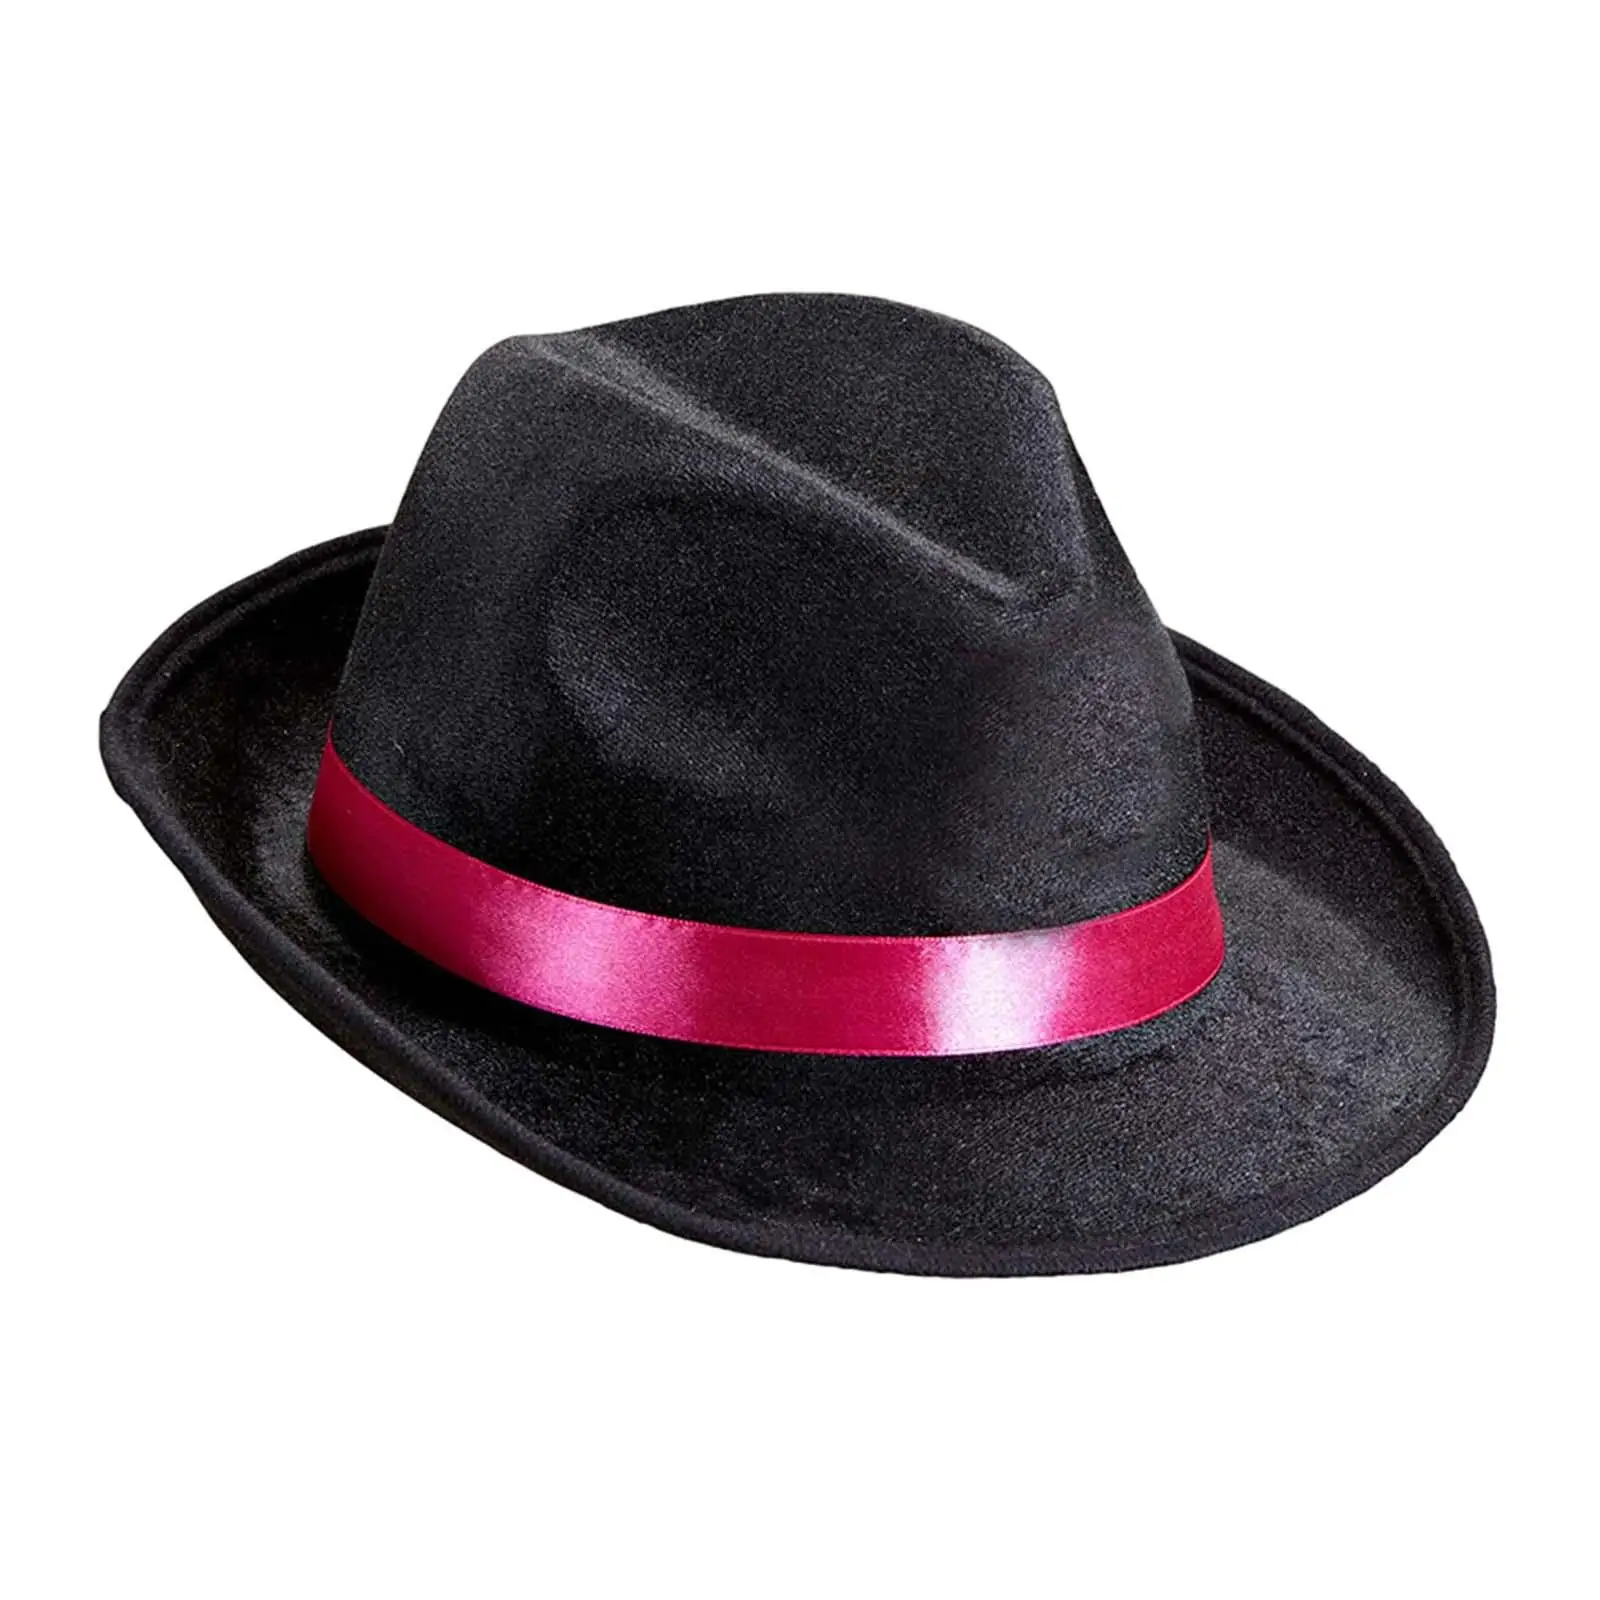 Fedora Hat Jazz Hat Derby Bowler Hat Men Women Fashion Headgear Panama Hat Top Hat for Rave Party Nightclub Travel Halloween